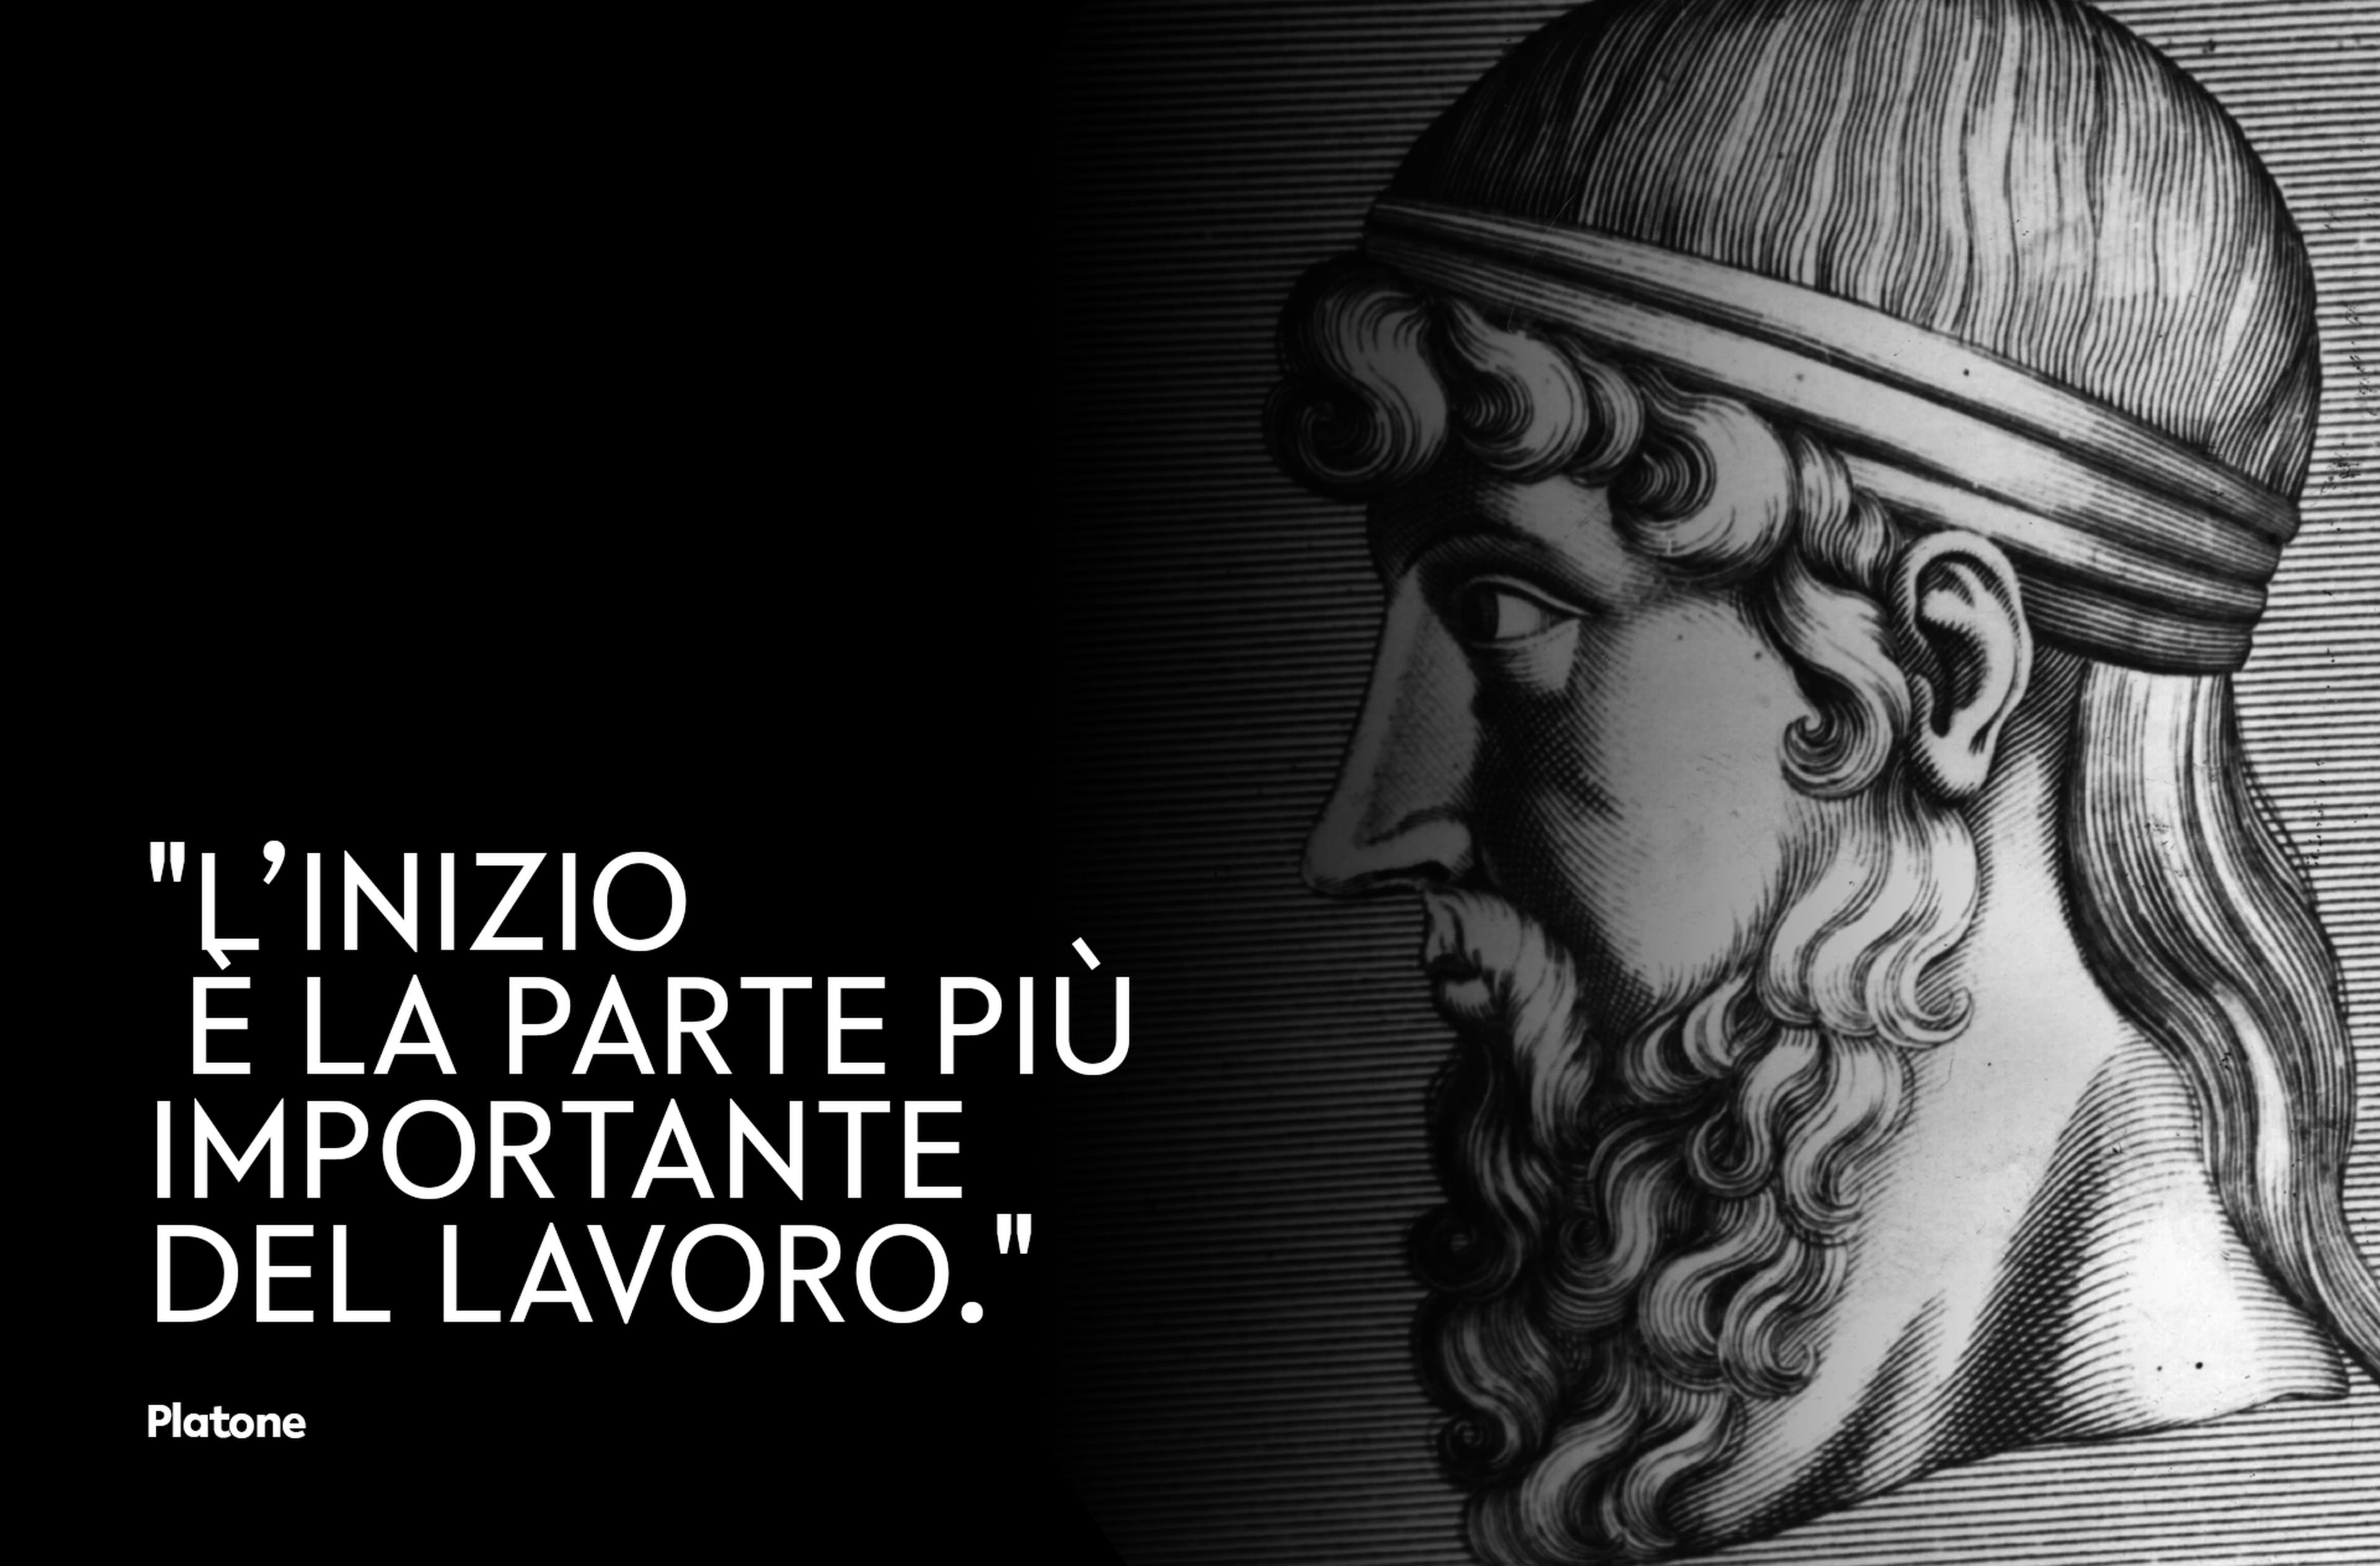 Copertina Platone frasi